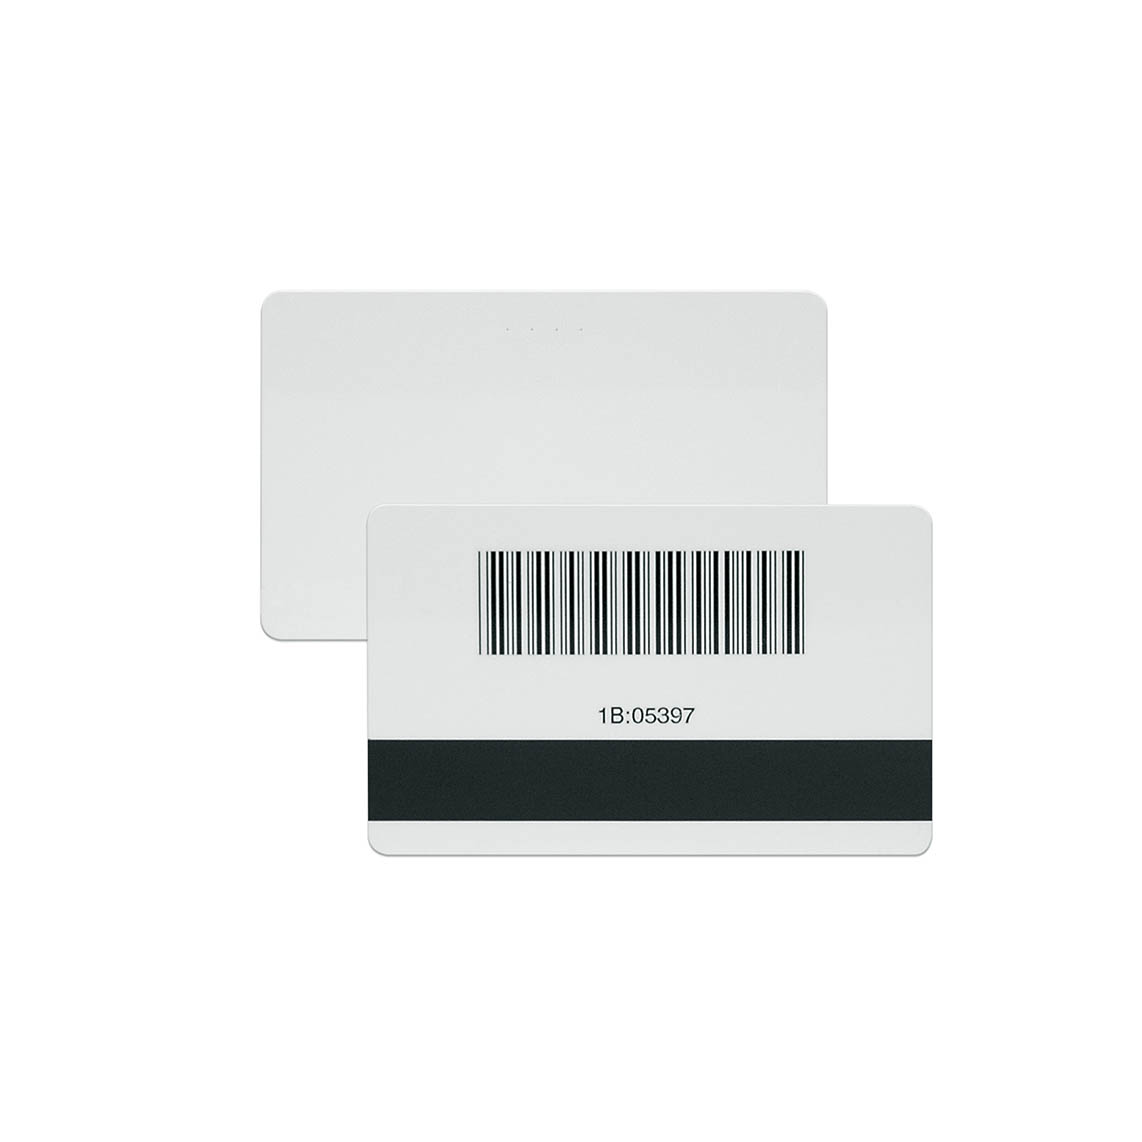 POL2 Magnetic Stripe Card Reader - TURNSTILES.us